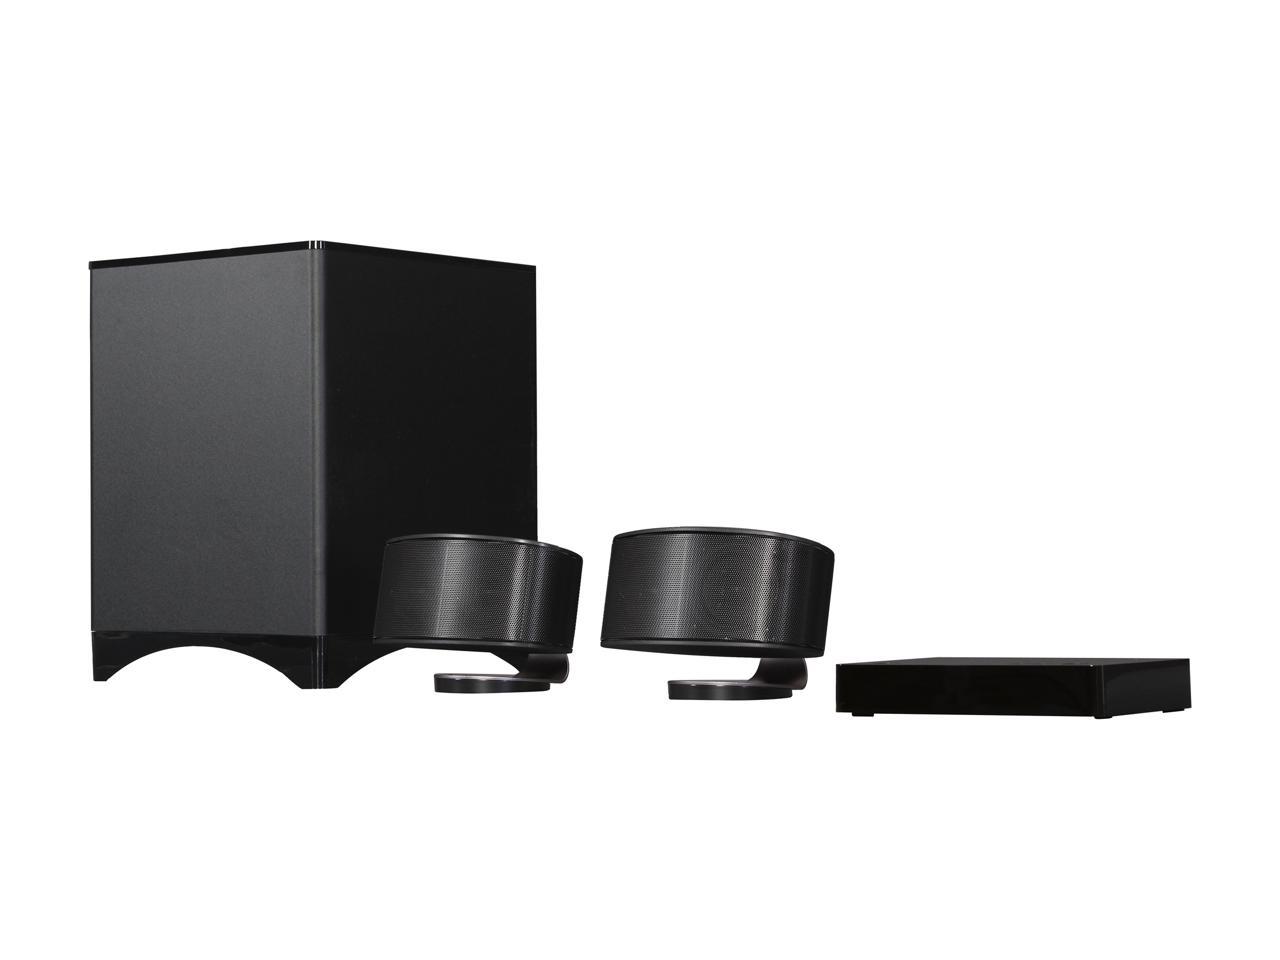 herder Beperken Belang Onkyo LS3100 Bluetooth Speaker Envision Cinema 2.1 System - Newegg.com